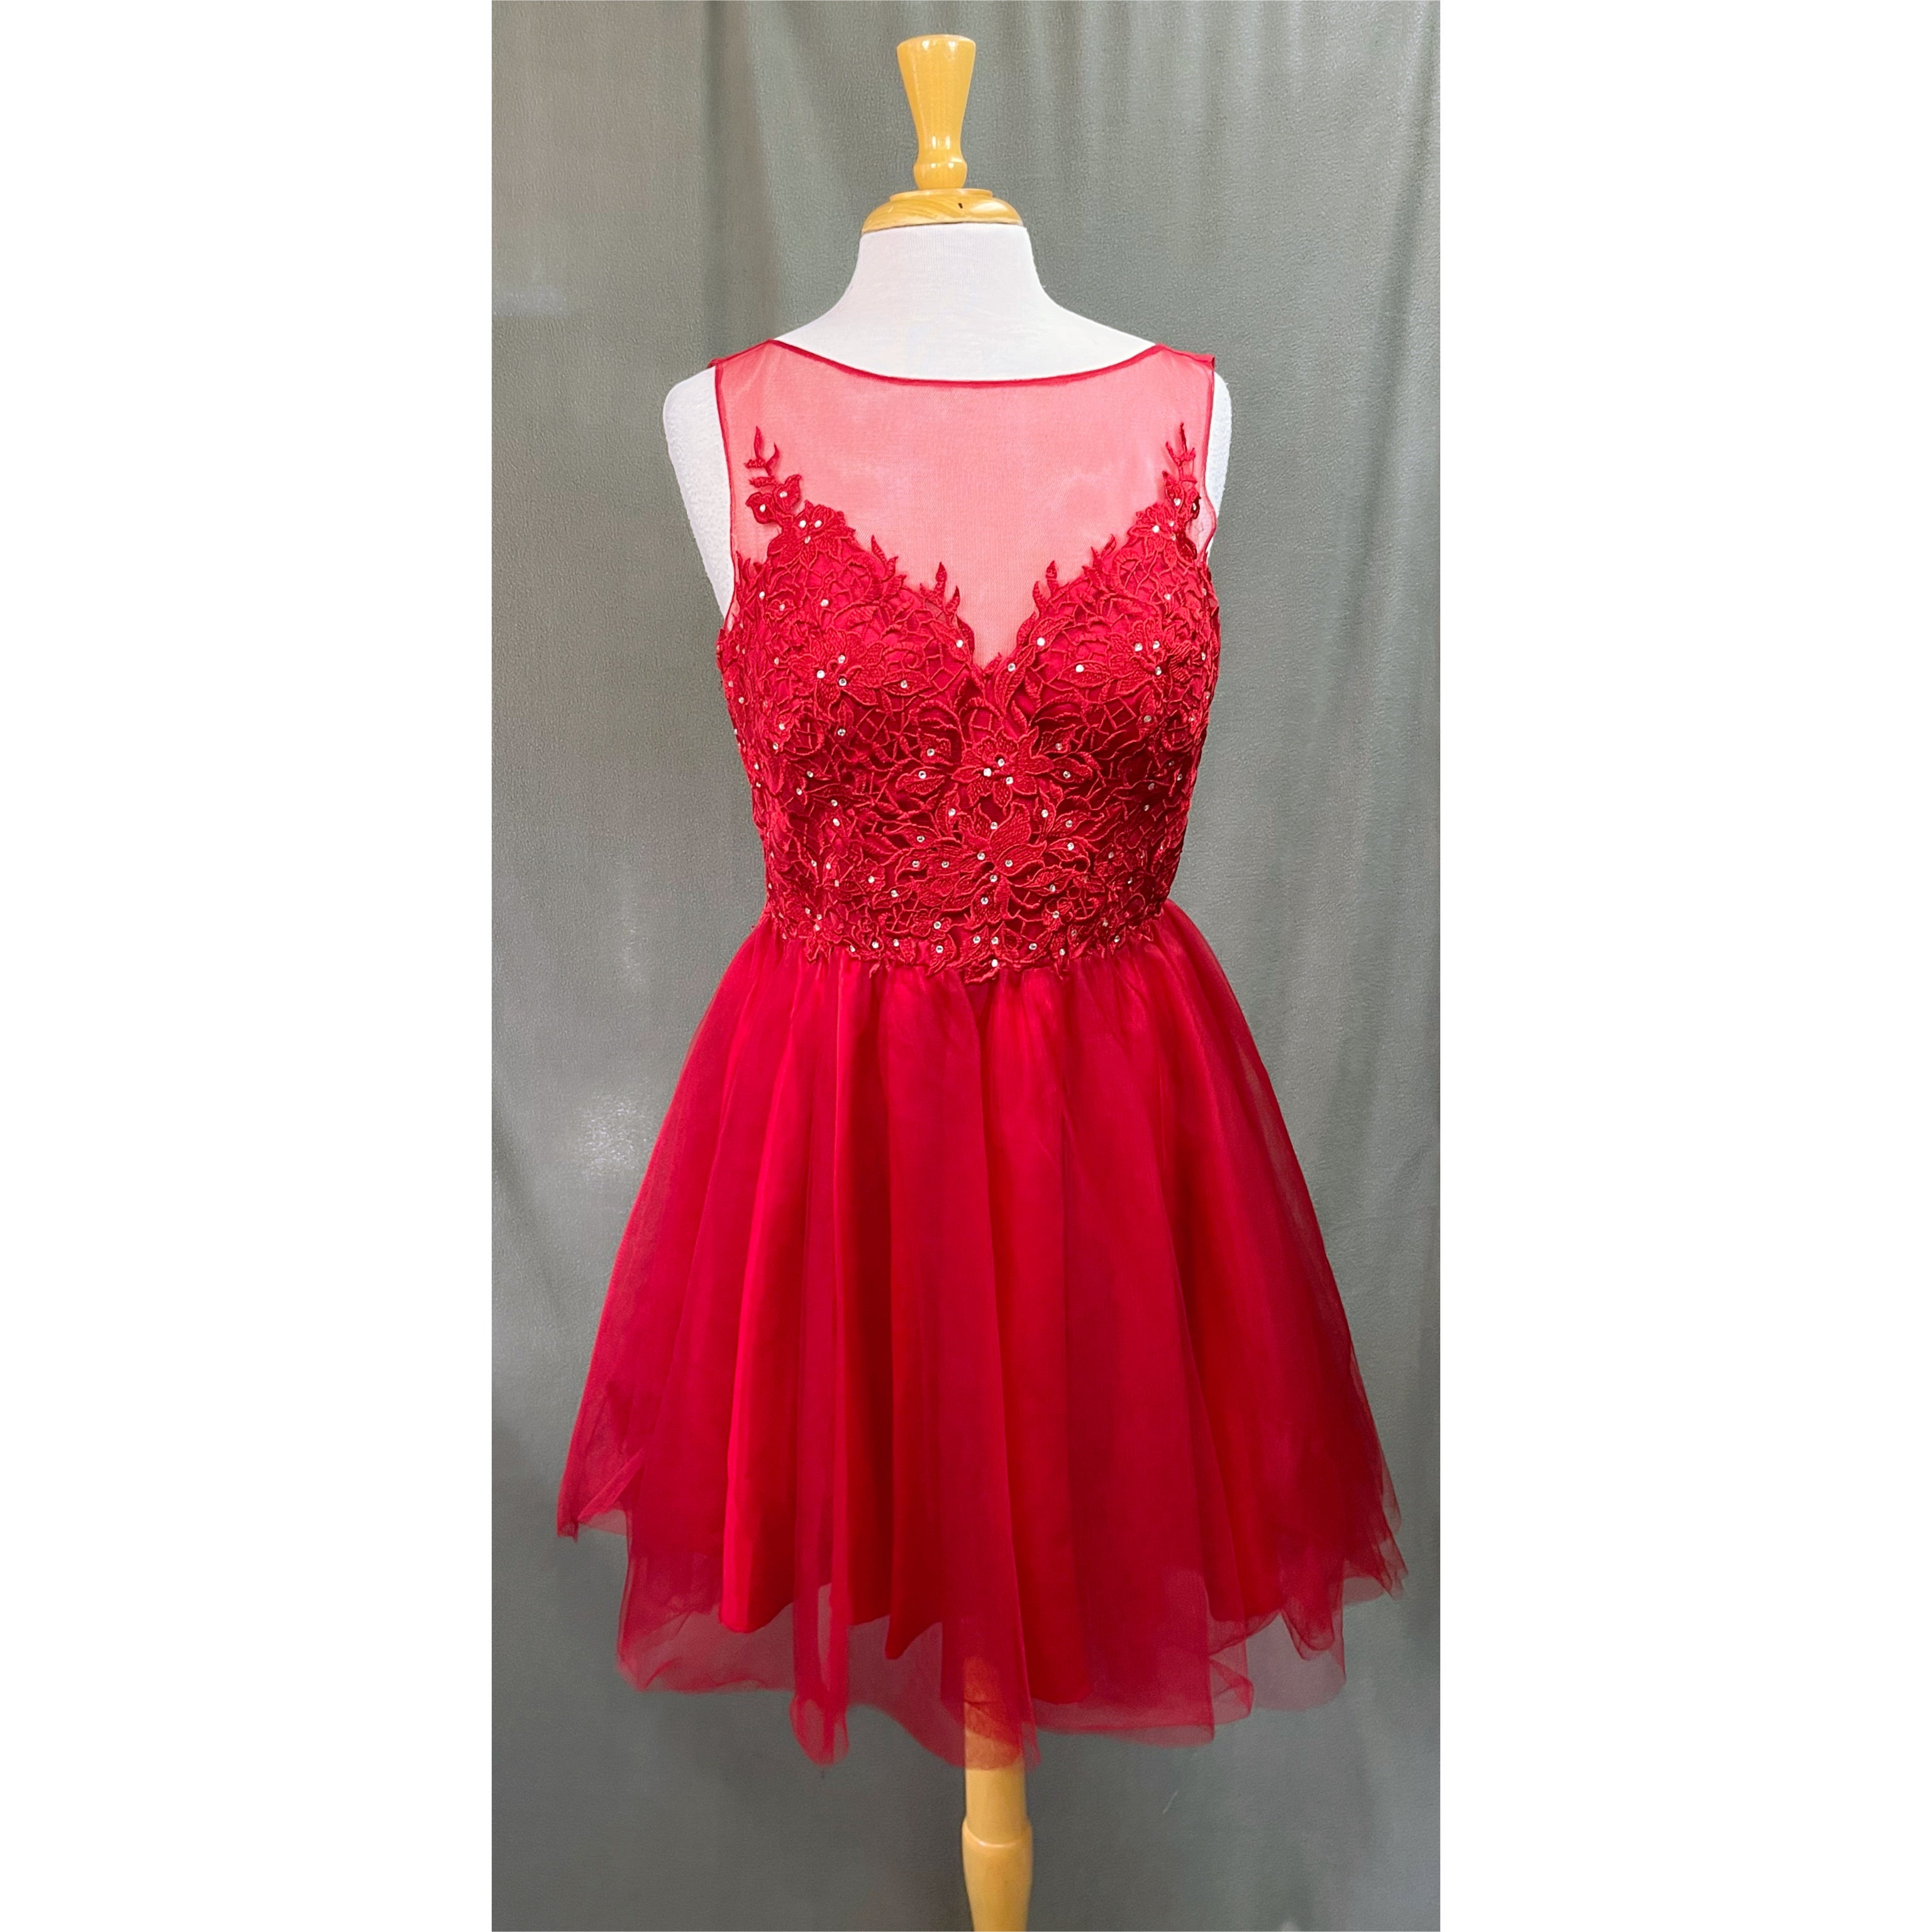 Coya red dress, size L